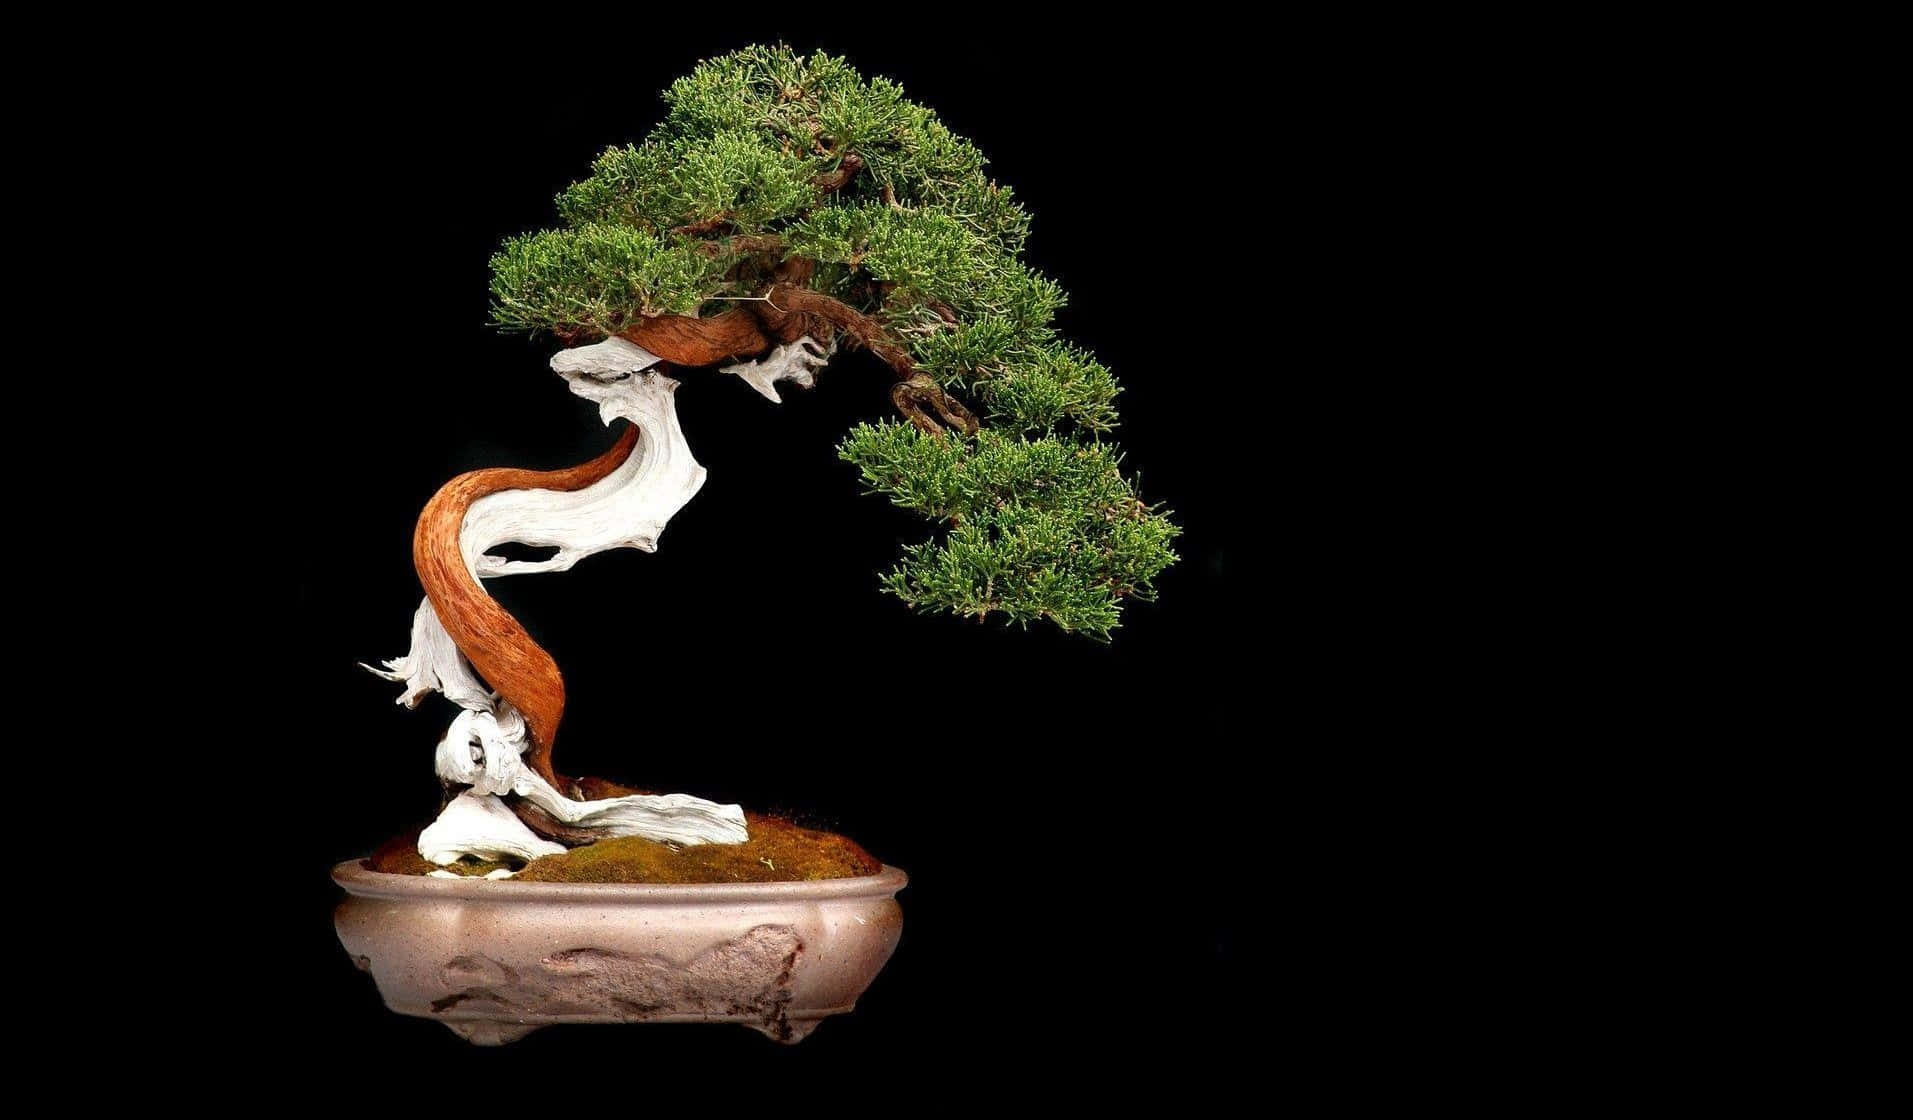 An elegant bonsai tree